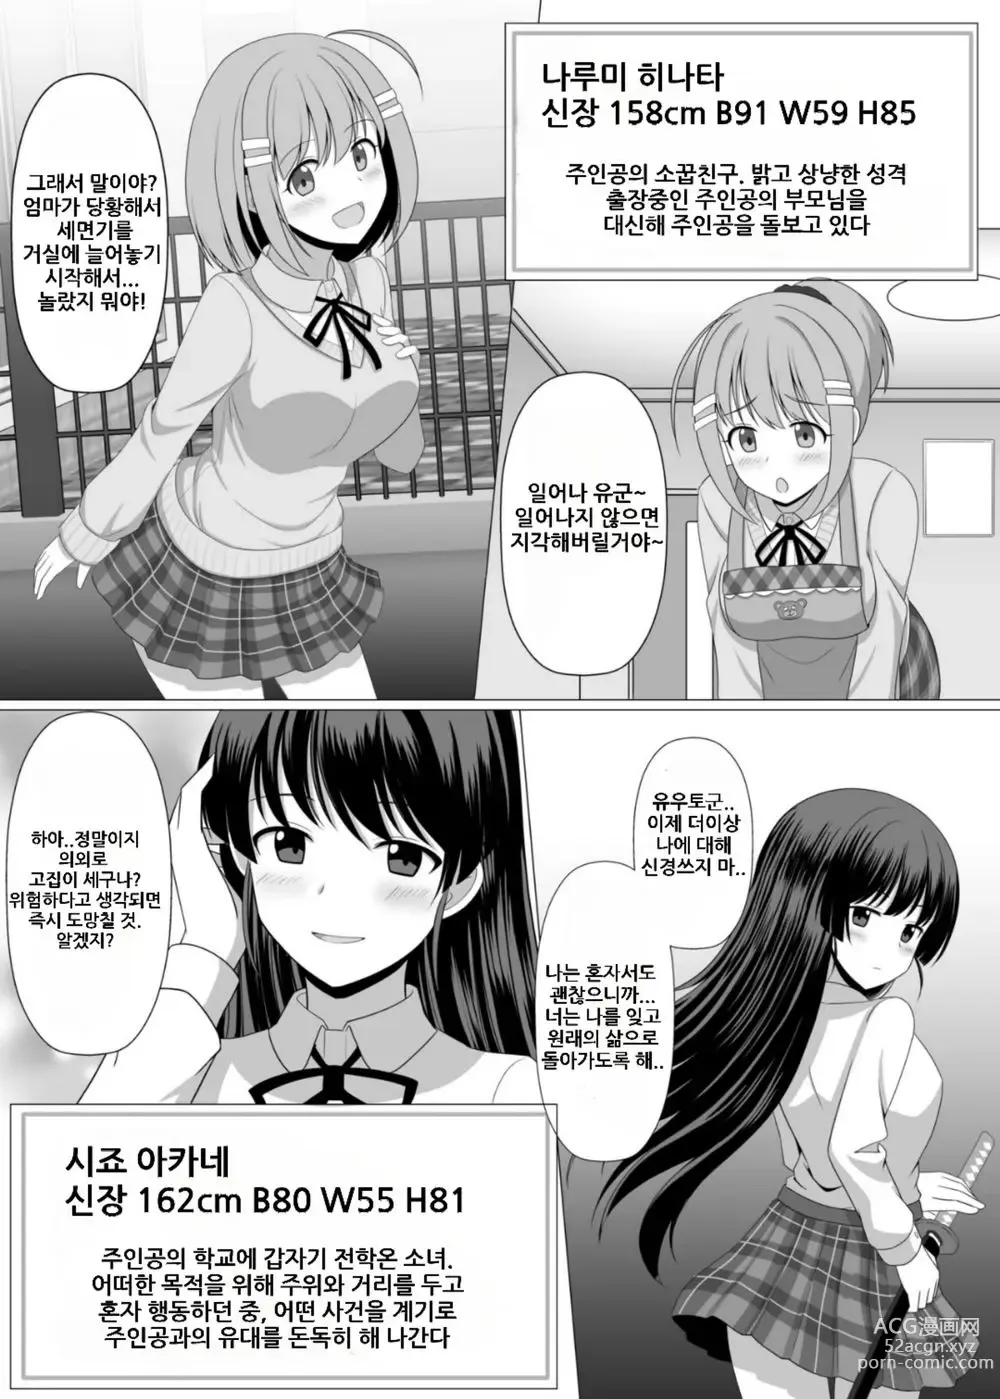 Page 1 of doujinshi 이능력 배틀 만화에서 소꿉친구가 적에게 조종당하는 이야기